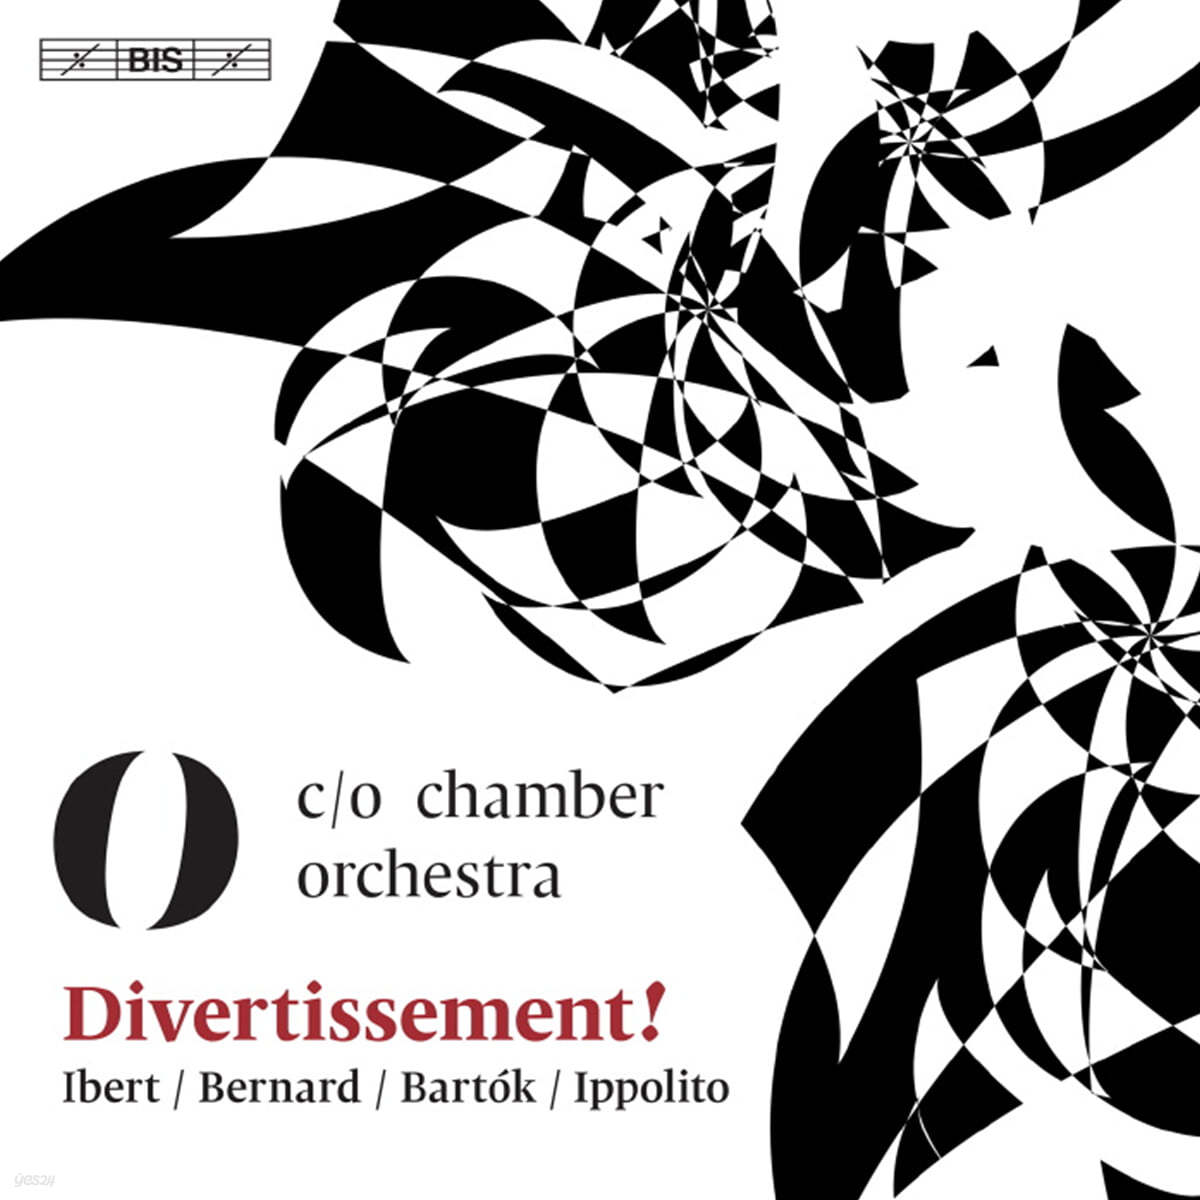 c/o chamber orchestra 이베르 / 베르나르 / 바르톡 / 이폴리토 - 디베르티멘토 (Ibert / Bernard / Bartok / Ippolitto - Divertissement!) 